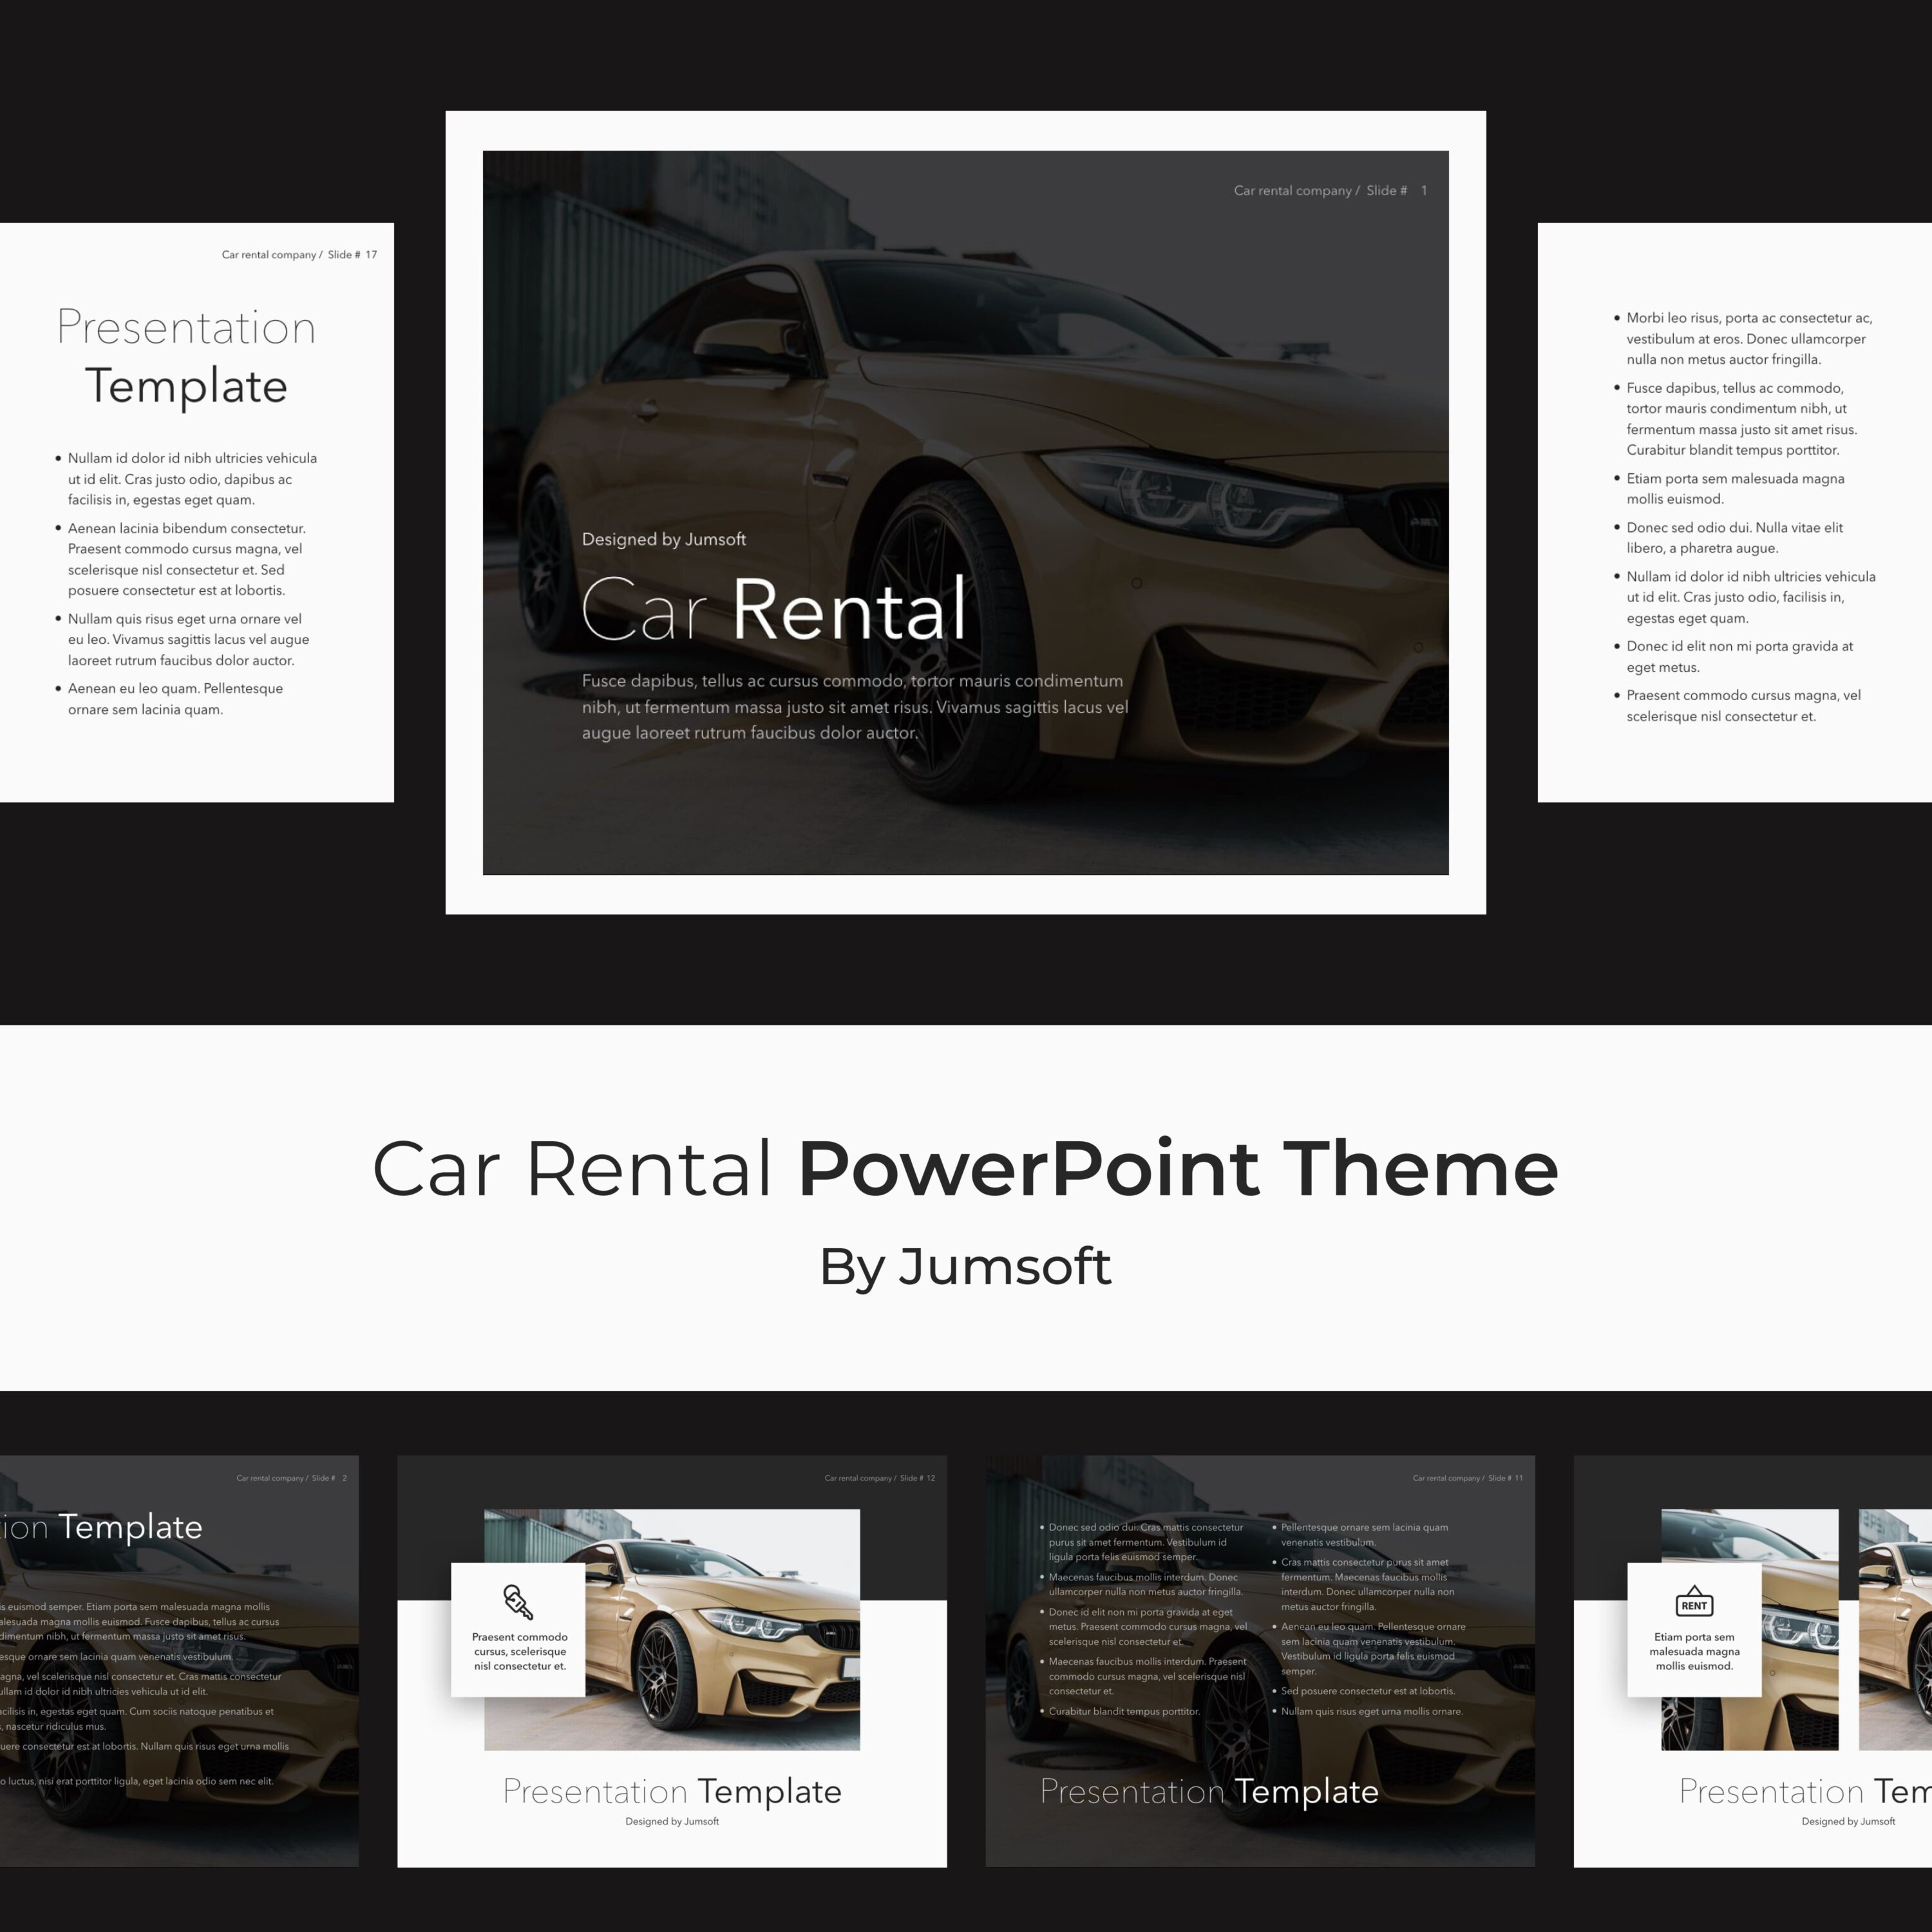 Car Rental PowerPoint Theme.